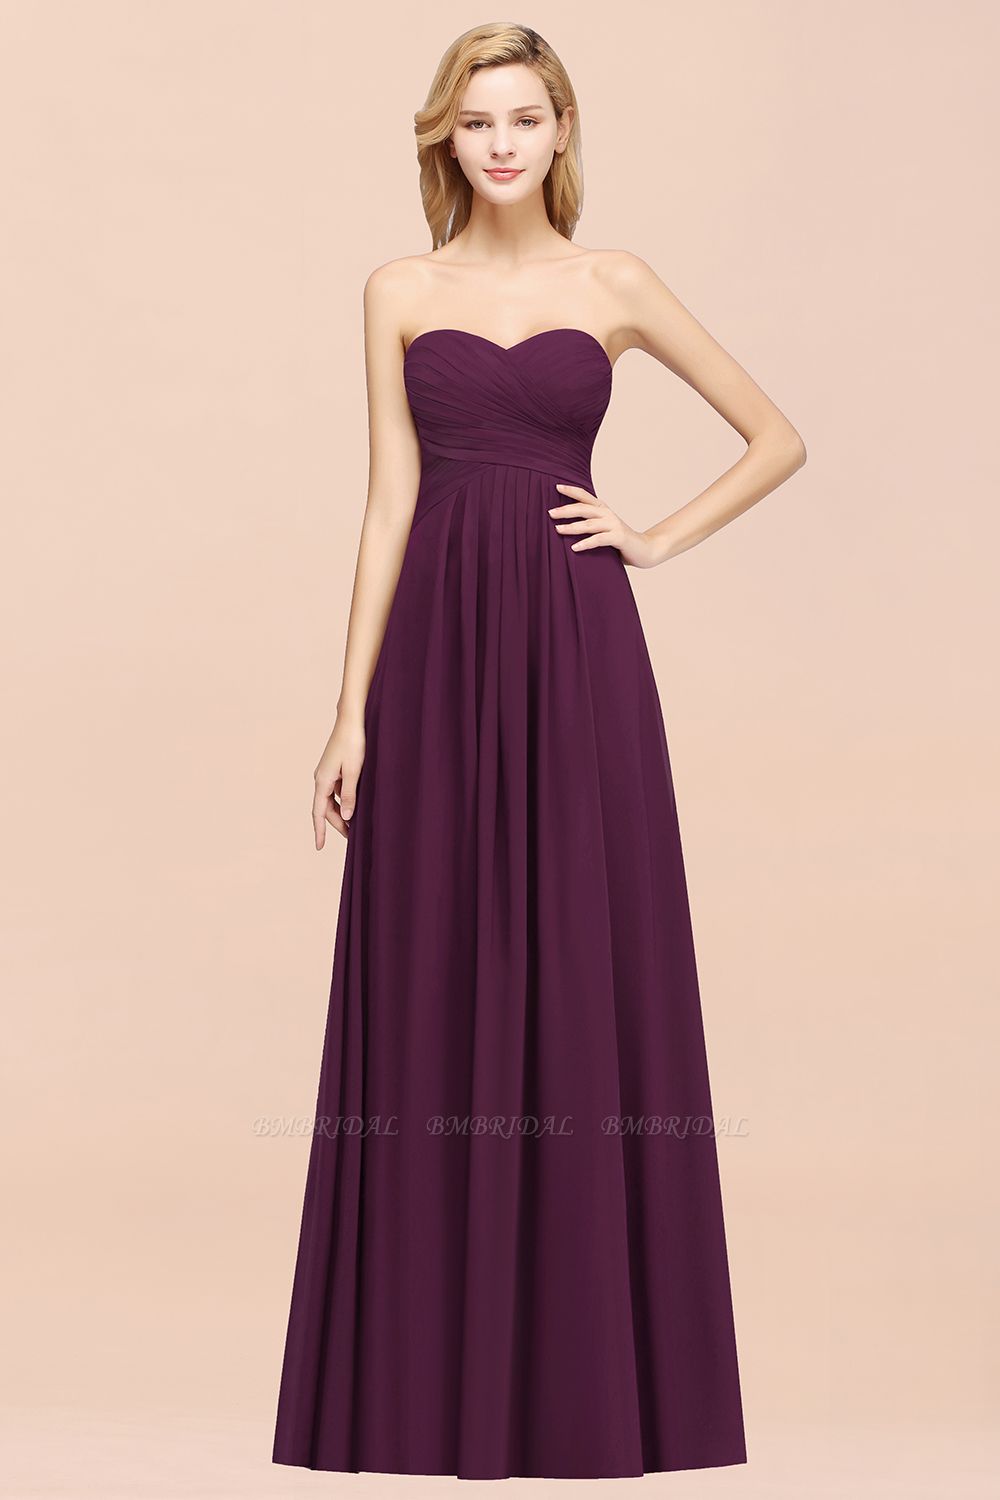 BMbridal Vintage Sweetheart Long Grape Affordable Bridesmaid Dresses Online